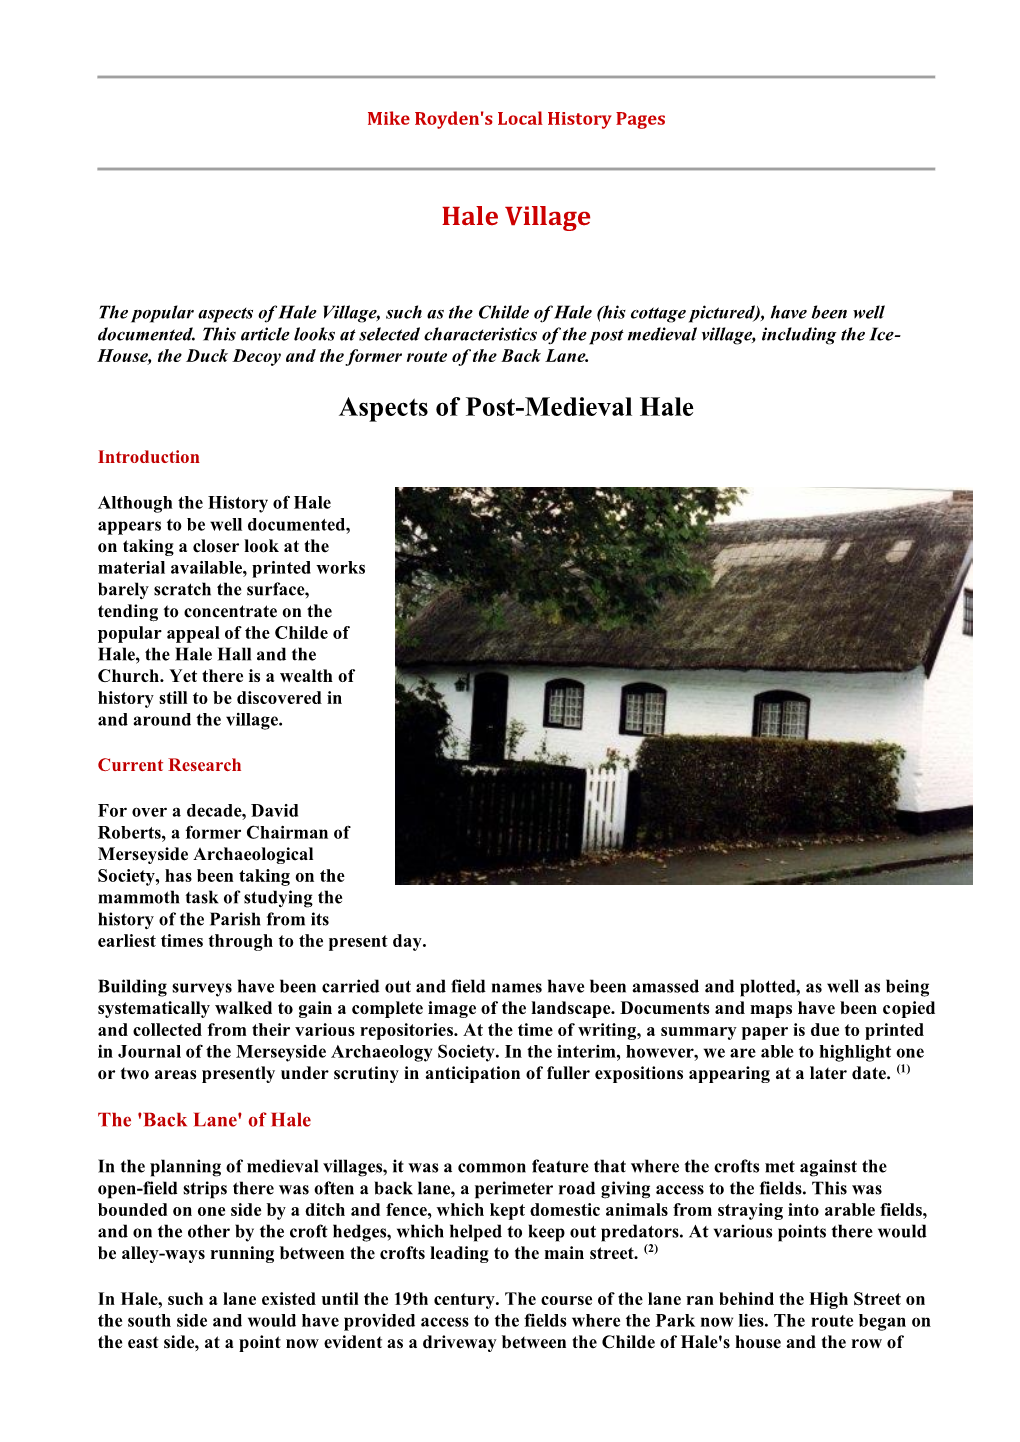 Hale Village Aspects of Post-Medieval Hale